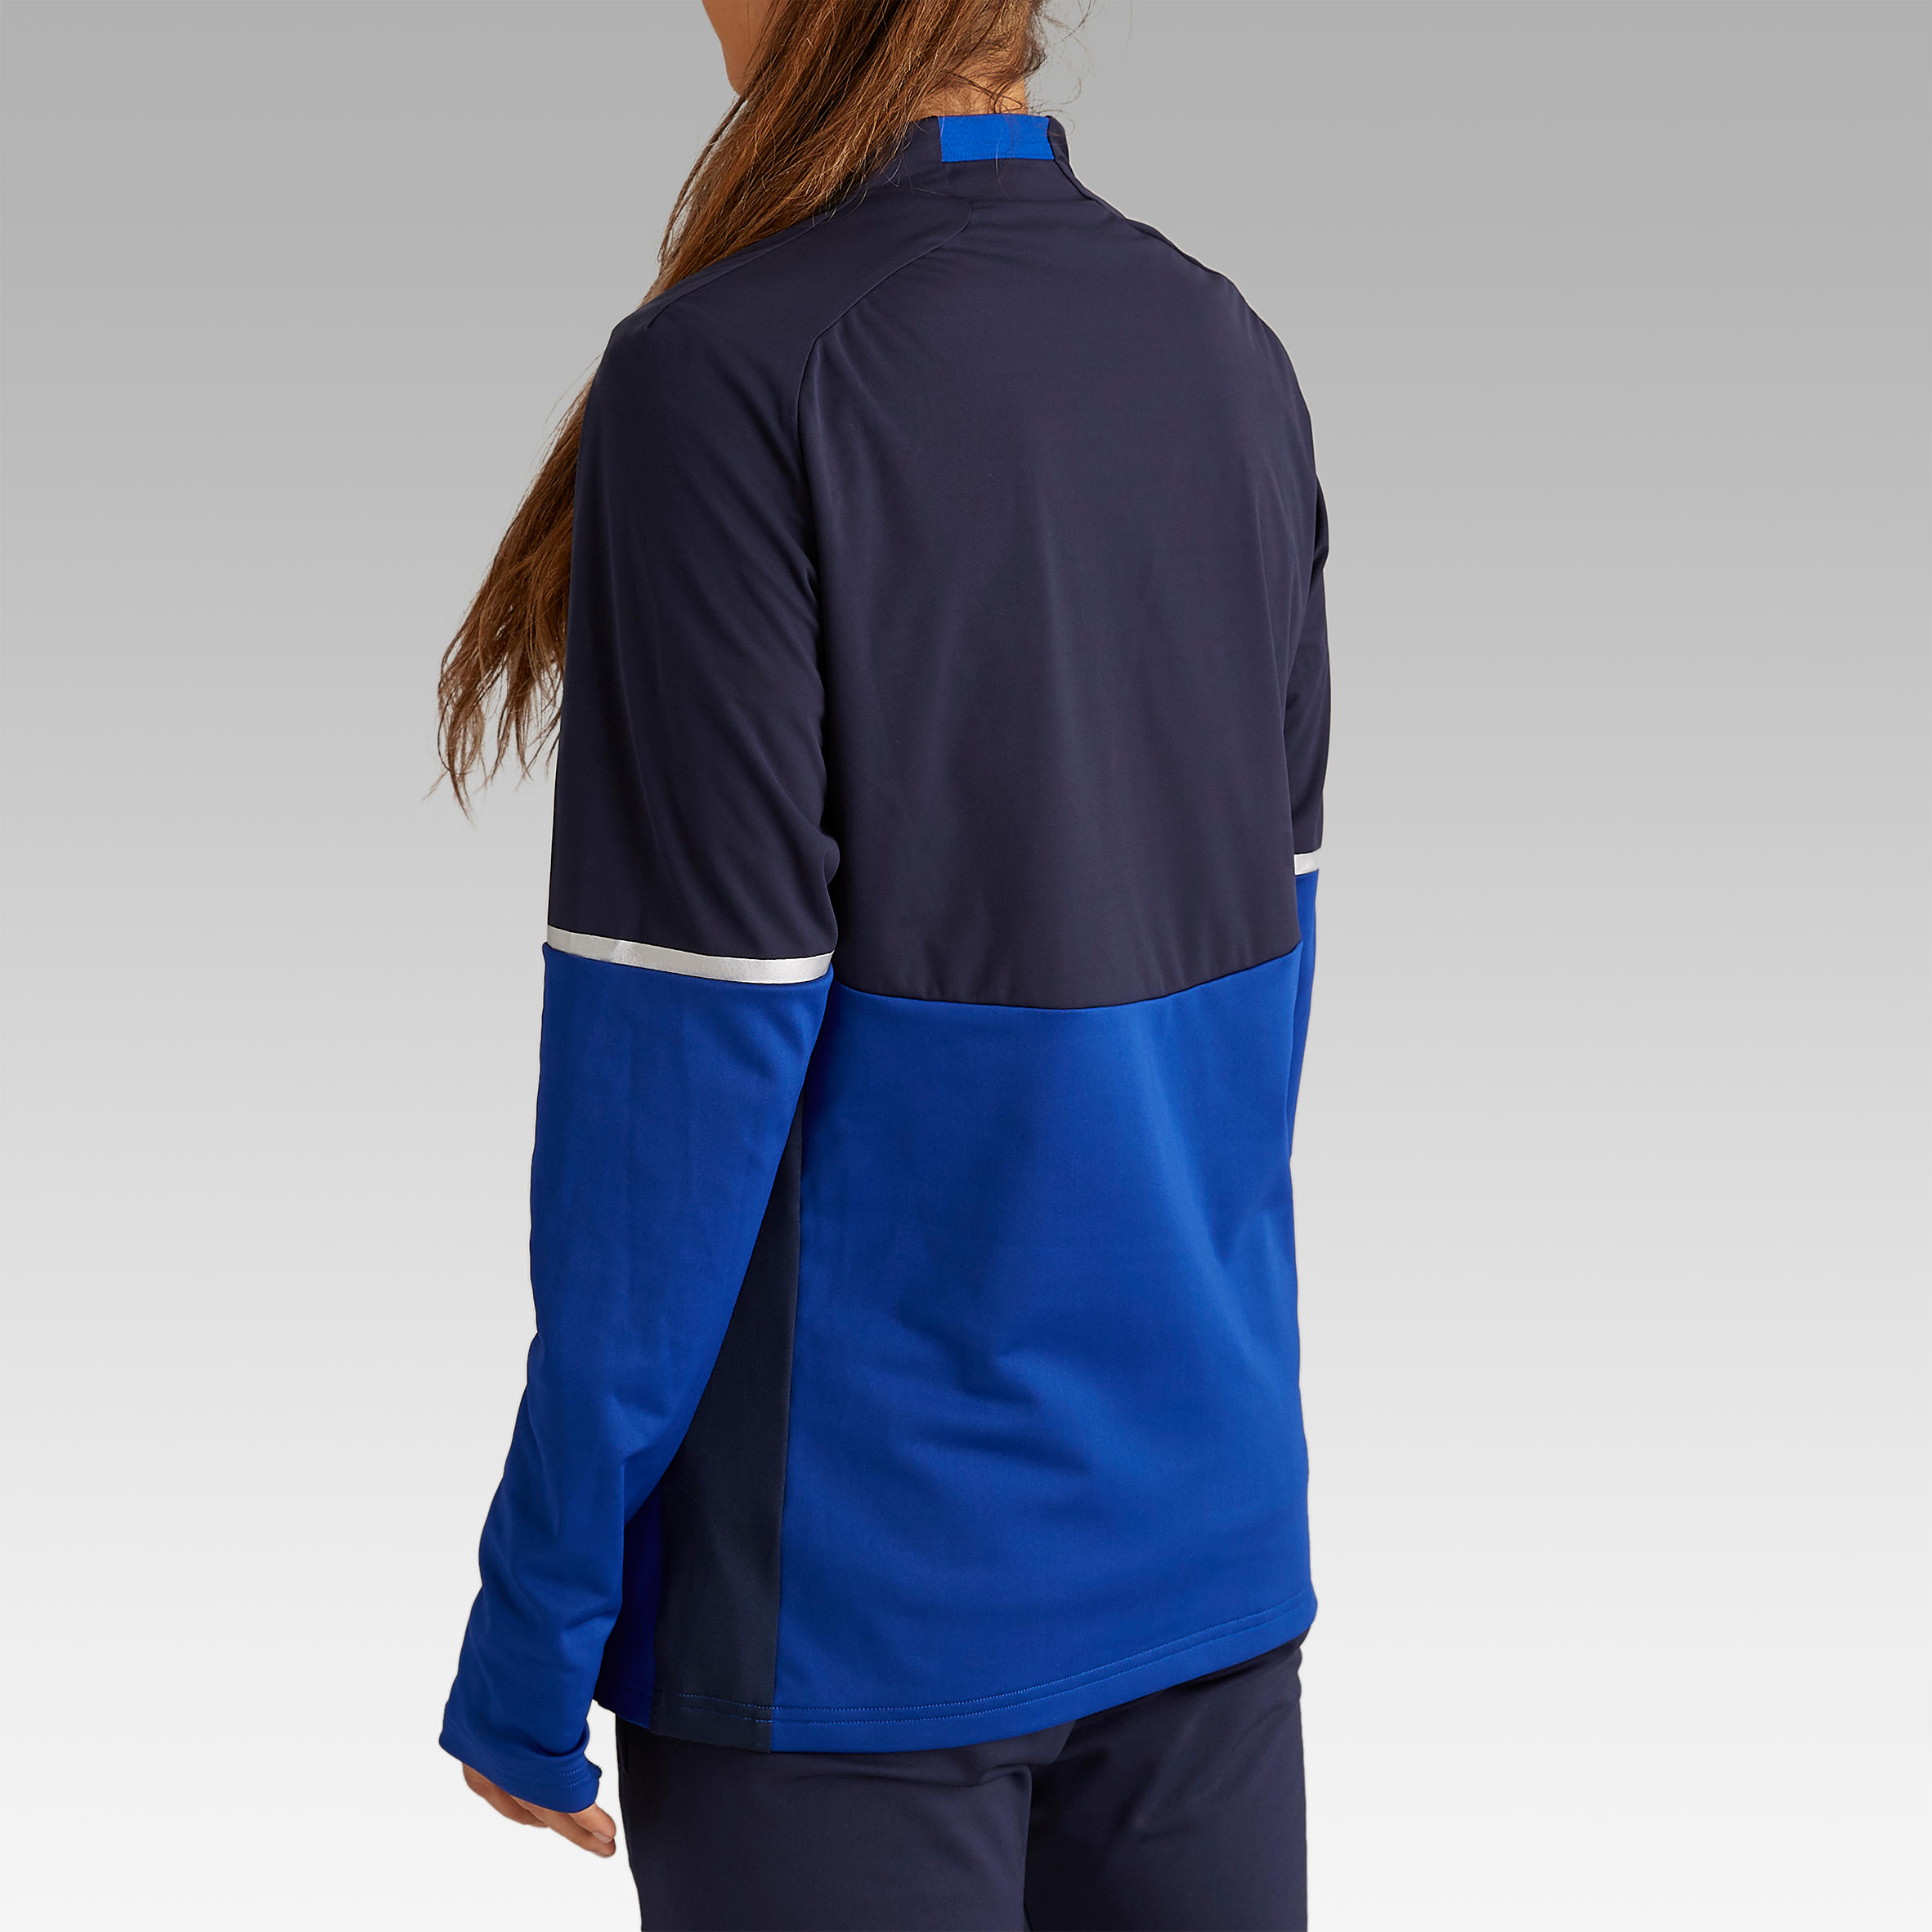 T500 Women's Football Training Sweatshirt - Blue 5/14